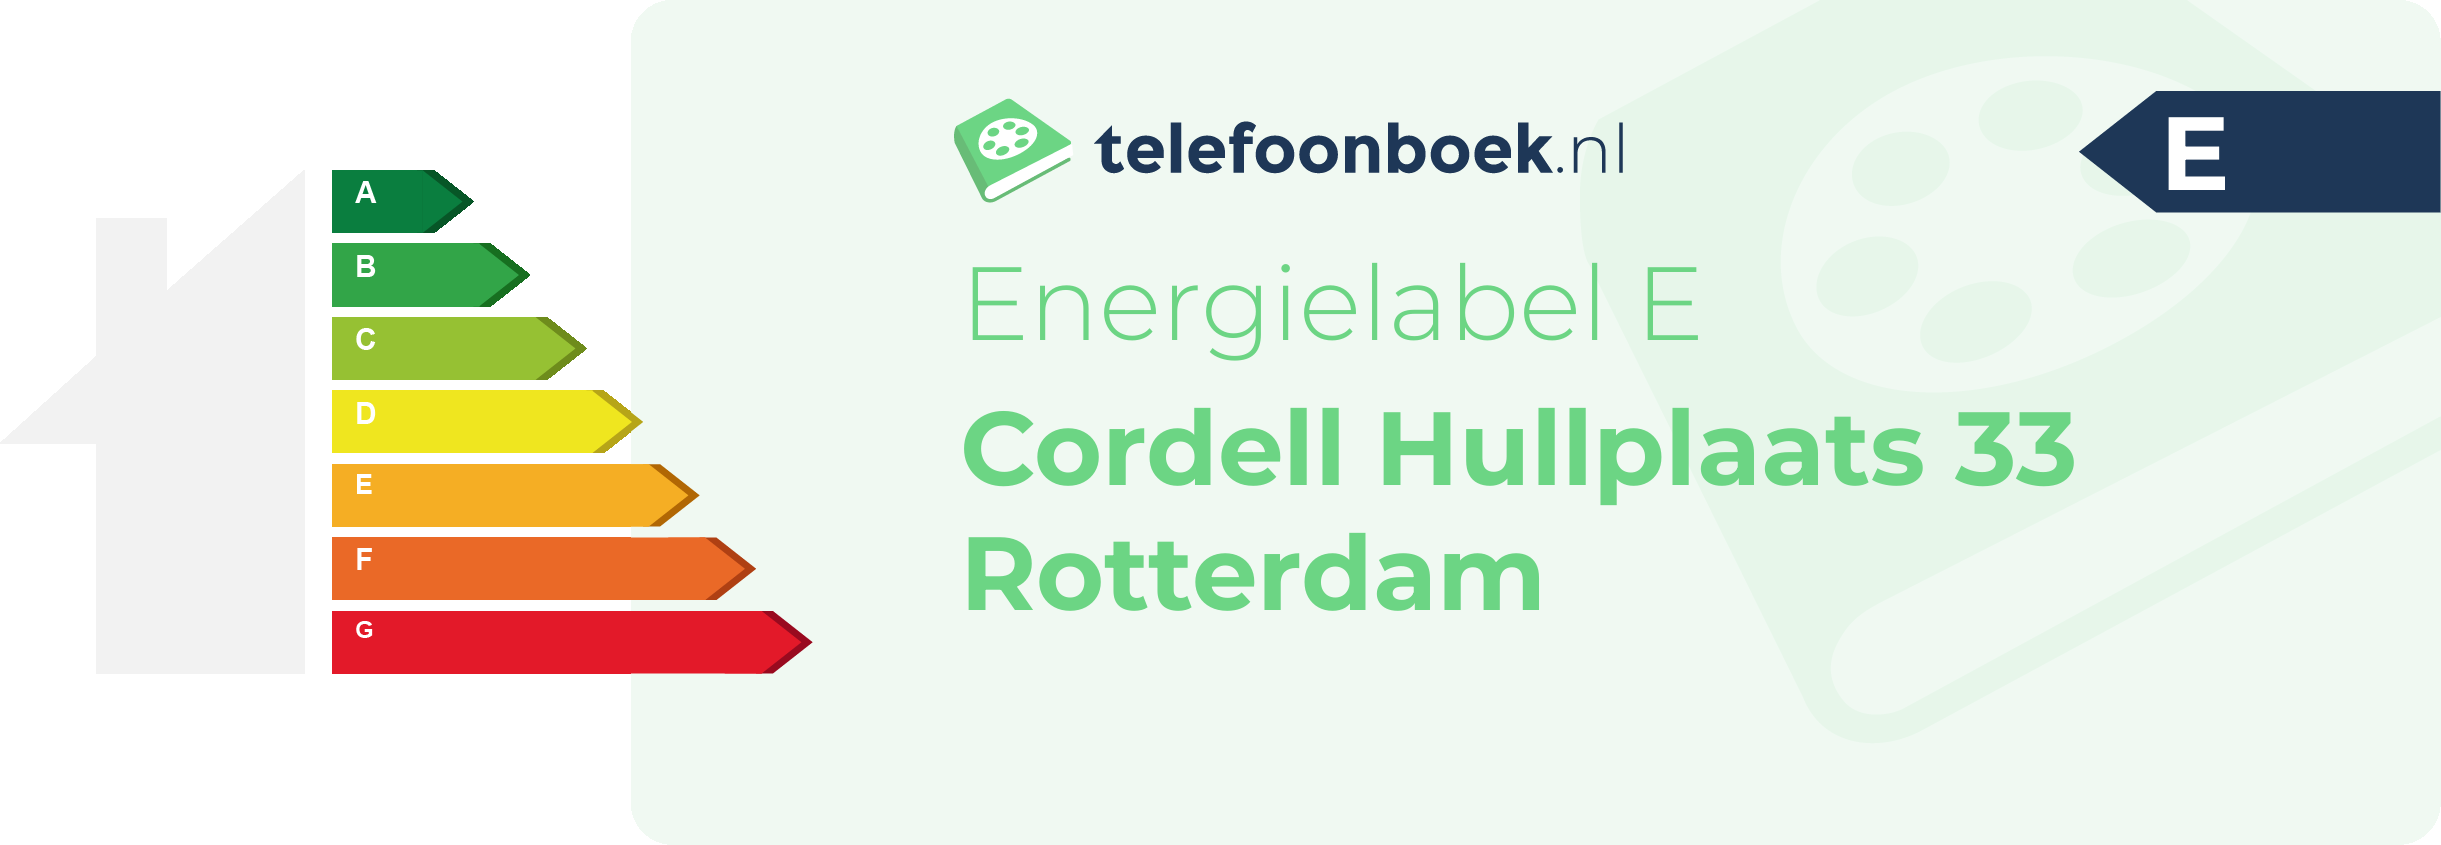 Energielabel Cordell Hullplaats 33 Rotterdam